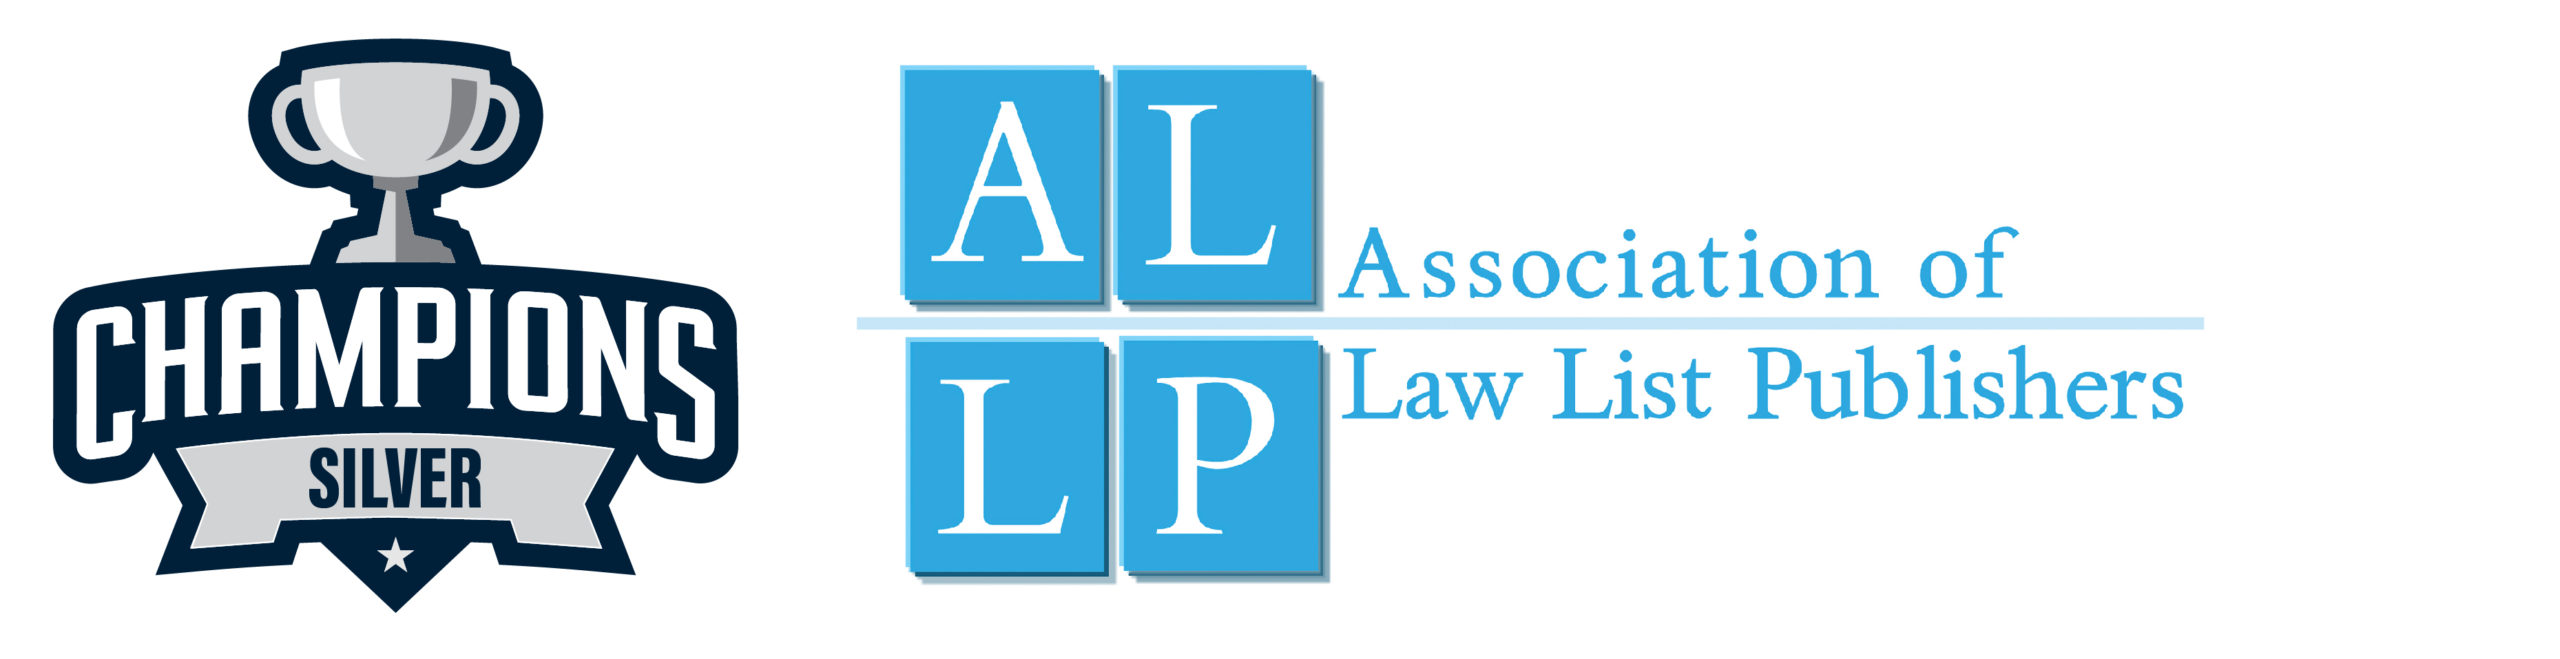 Association of Law List Publishers